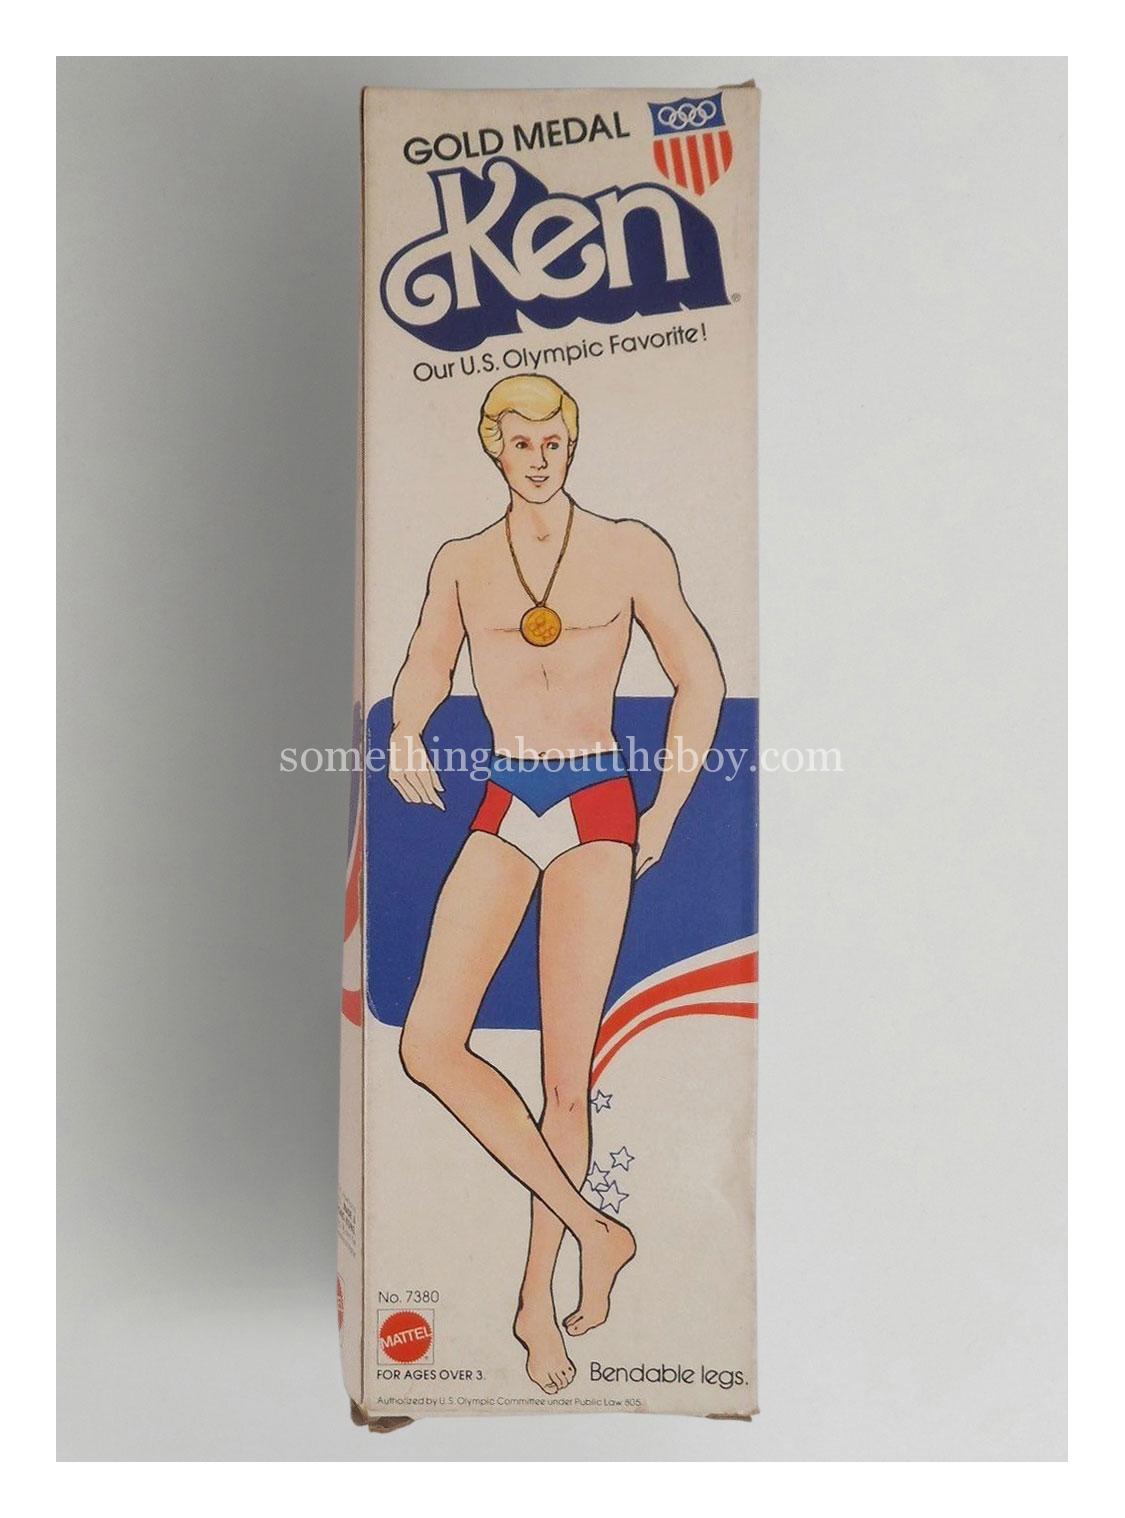 1976 #7380 Gold Medal Ken original packaging